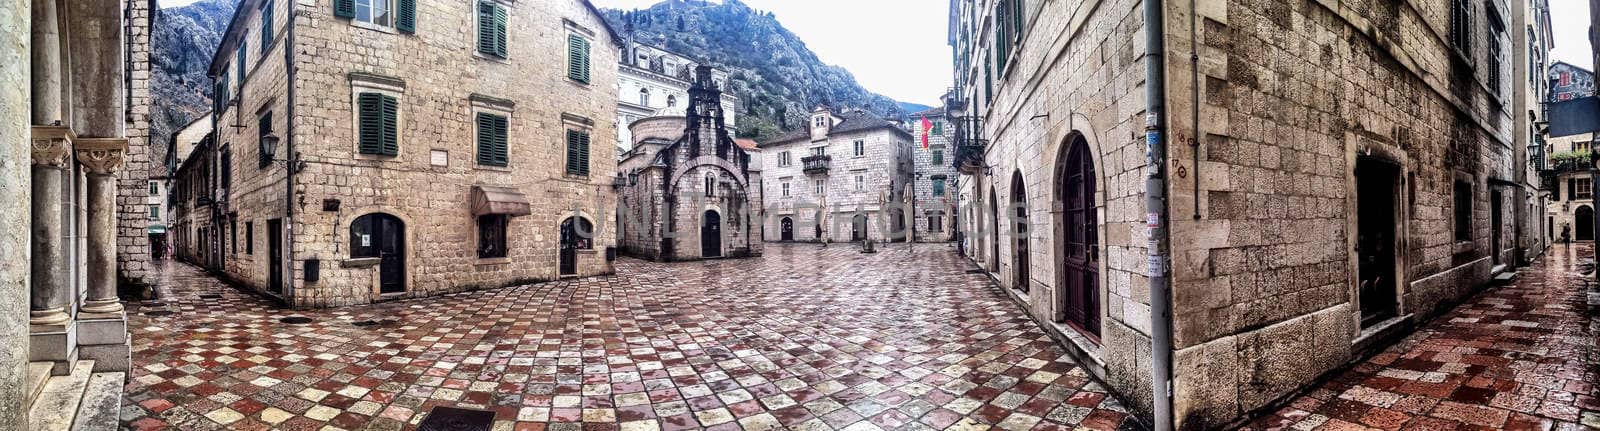 Empty streets of Kotor  by radzonimo